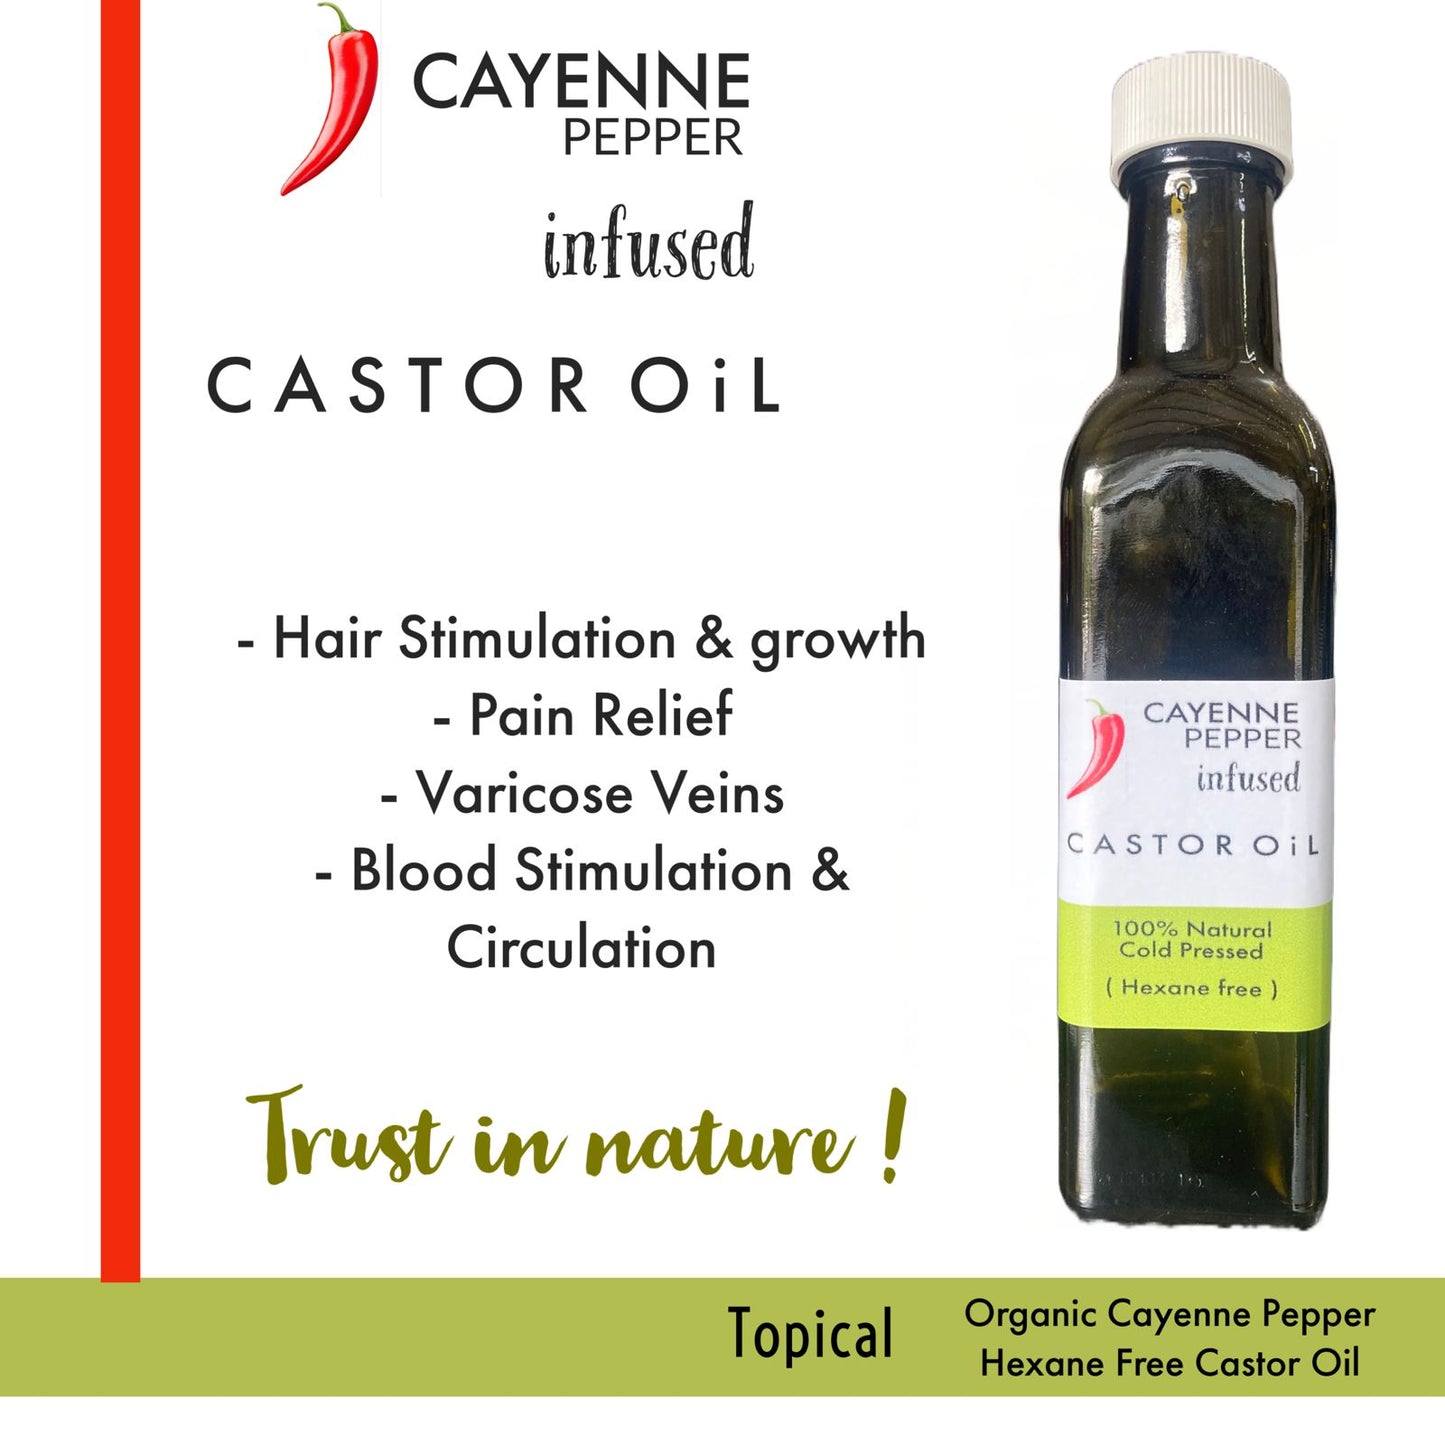 Cayenne Pepper Infused Castor Oil 250ml (Hexane Free)